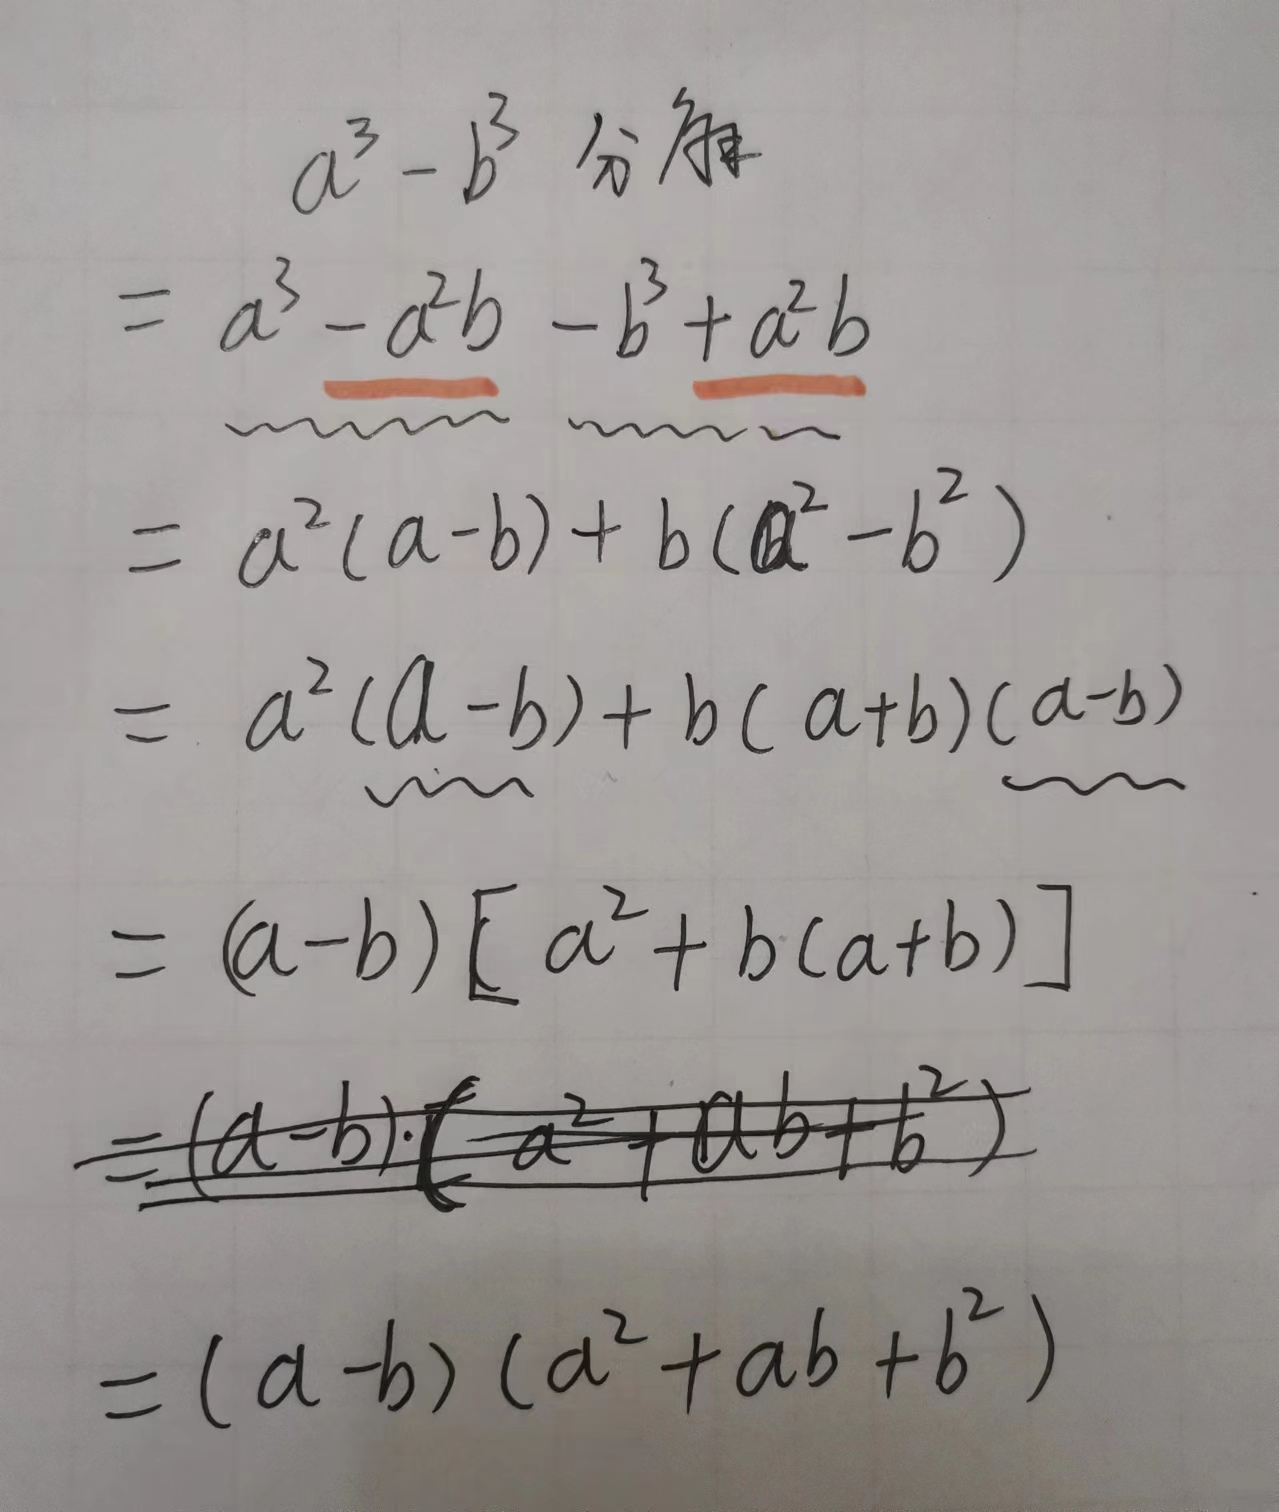 a³-b³=(a-b)(a²+ab+b²)。  立方差公式：两数的立方差等于两数的平方和加上两数的积再乘以两数的差，所得到的积就等于两数的立方差。